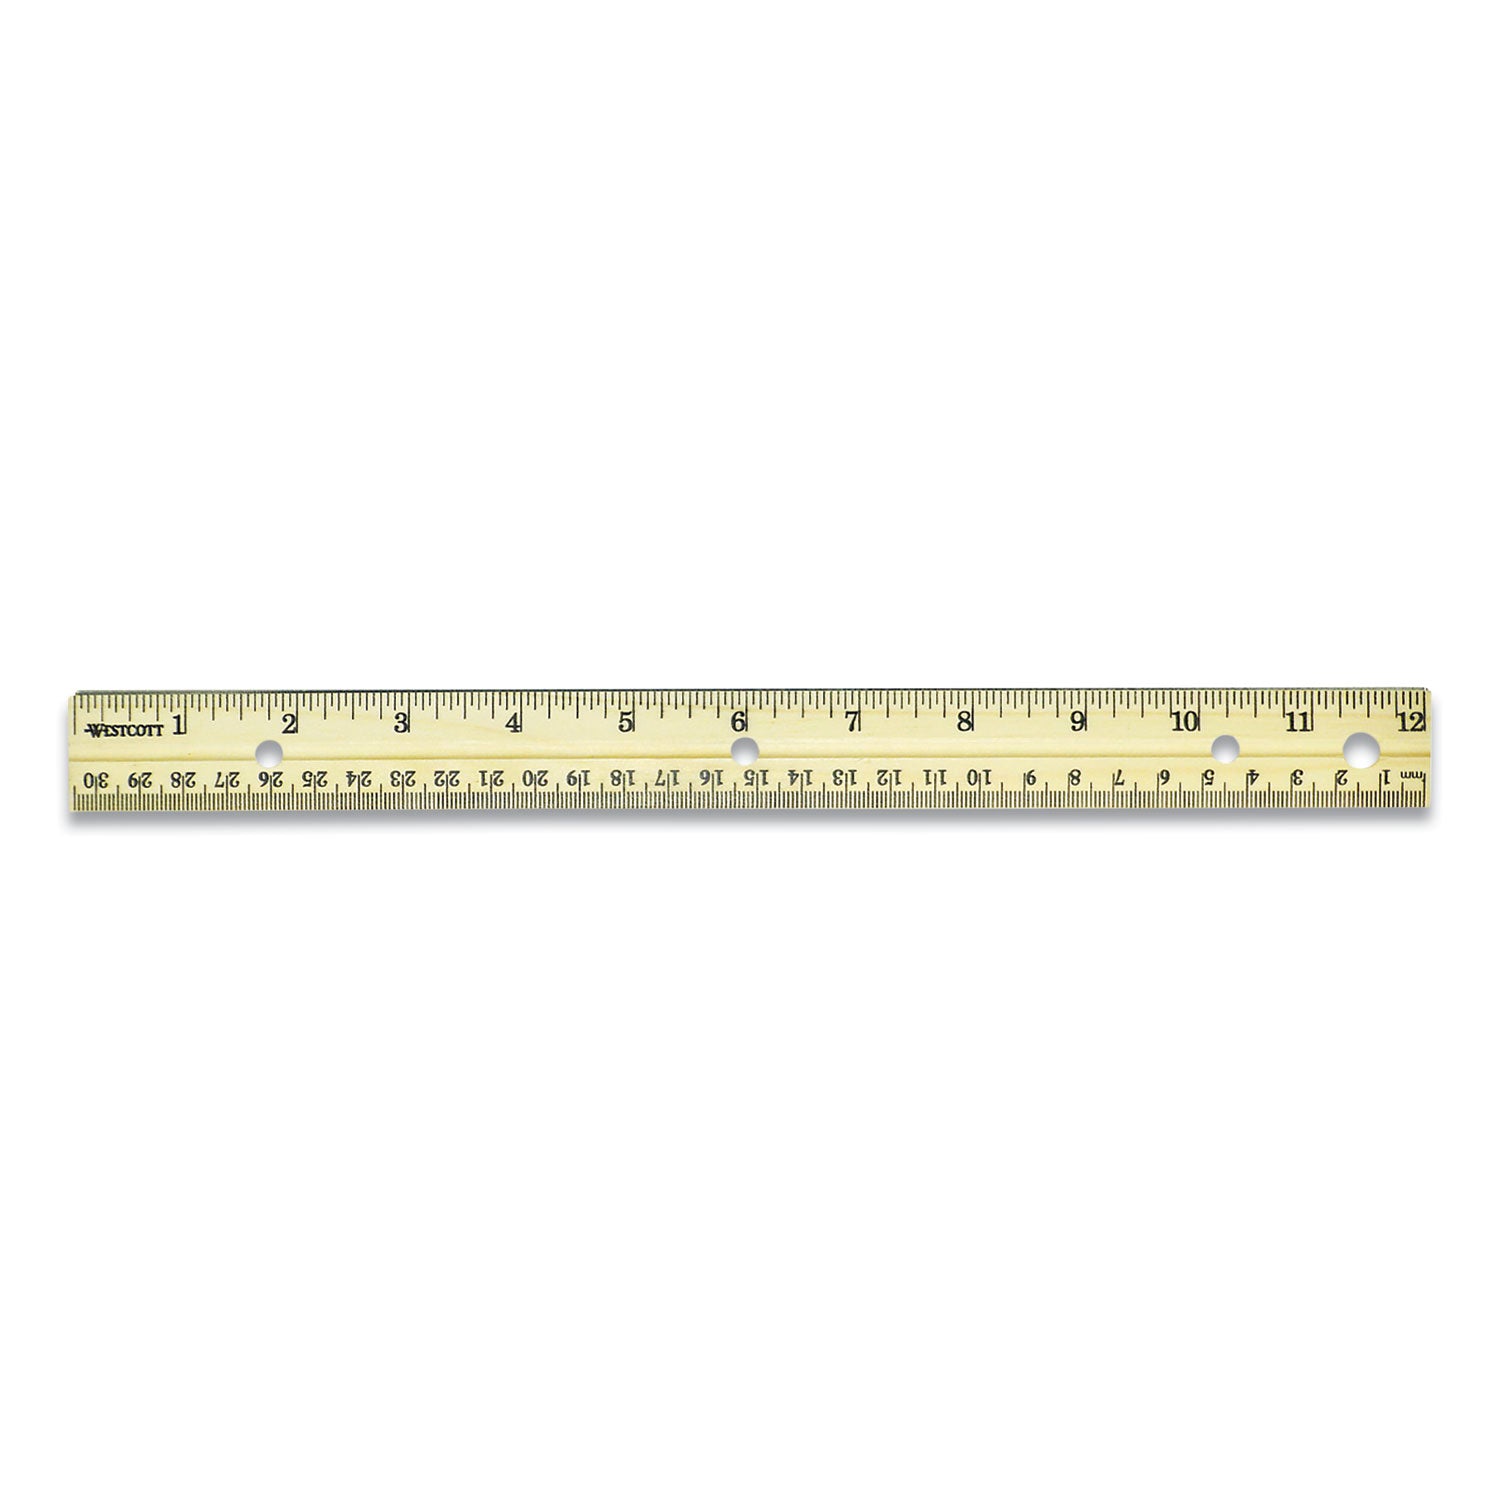 three-hole-punched-wood-ruler-standard-metric-12-30-cm-long-natural-wood-36-box_acm17724 - 2